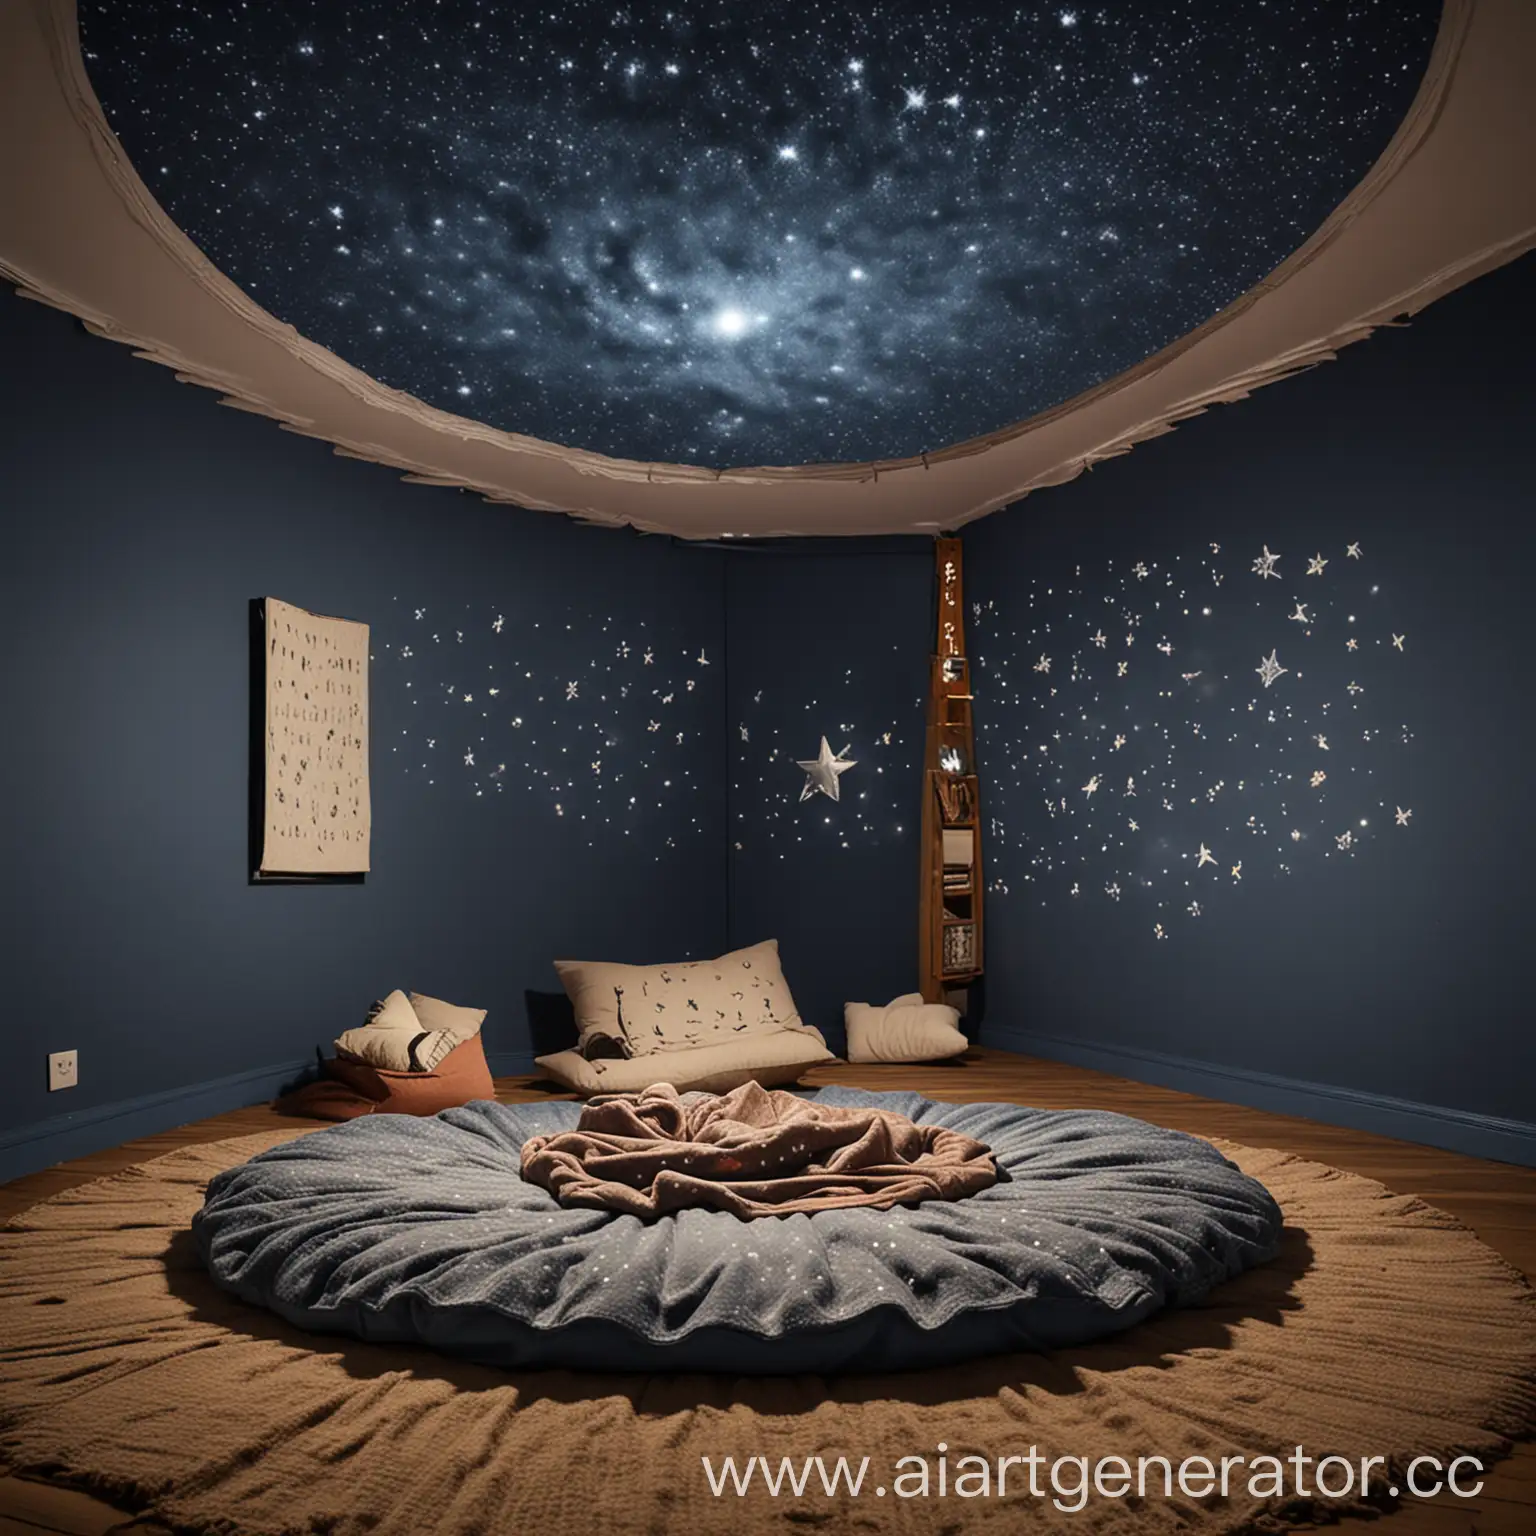 Комната с подушками и пледом на полу по кругу, в центре проектор звездного неба